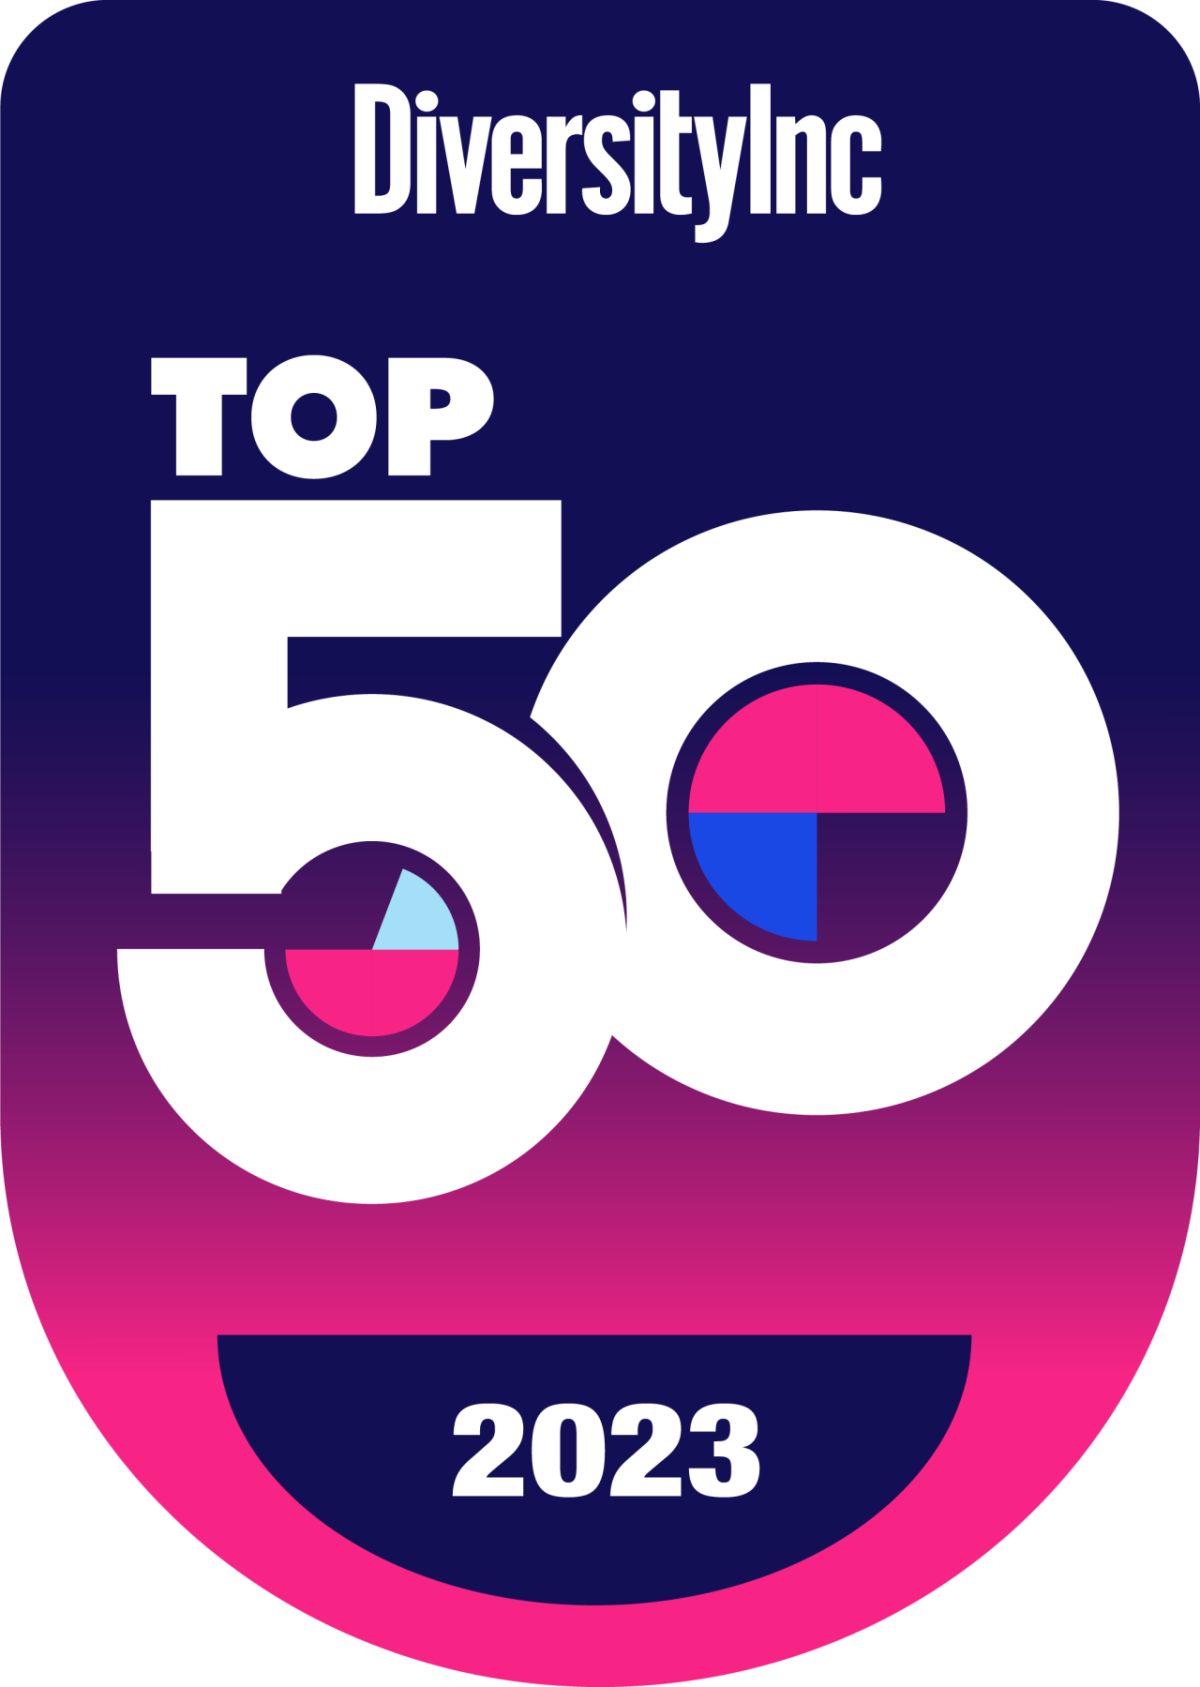 DiversityInc Top 50 2023 logo